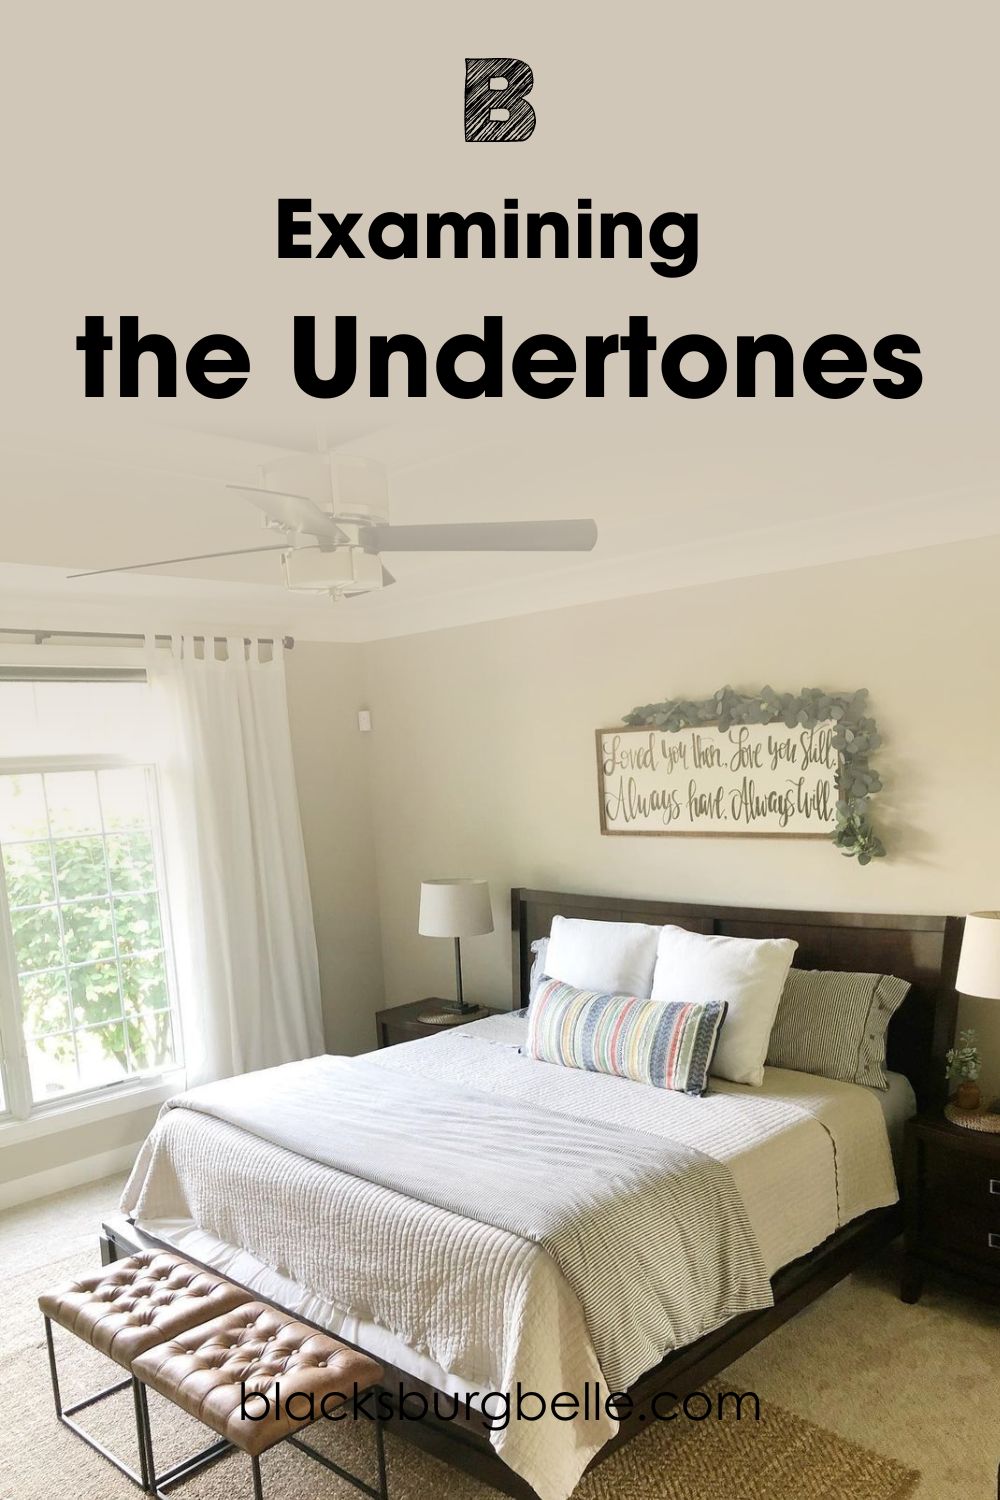 Examining the Undertones